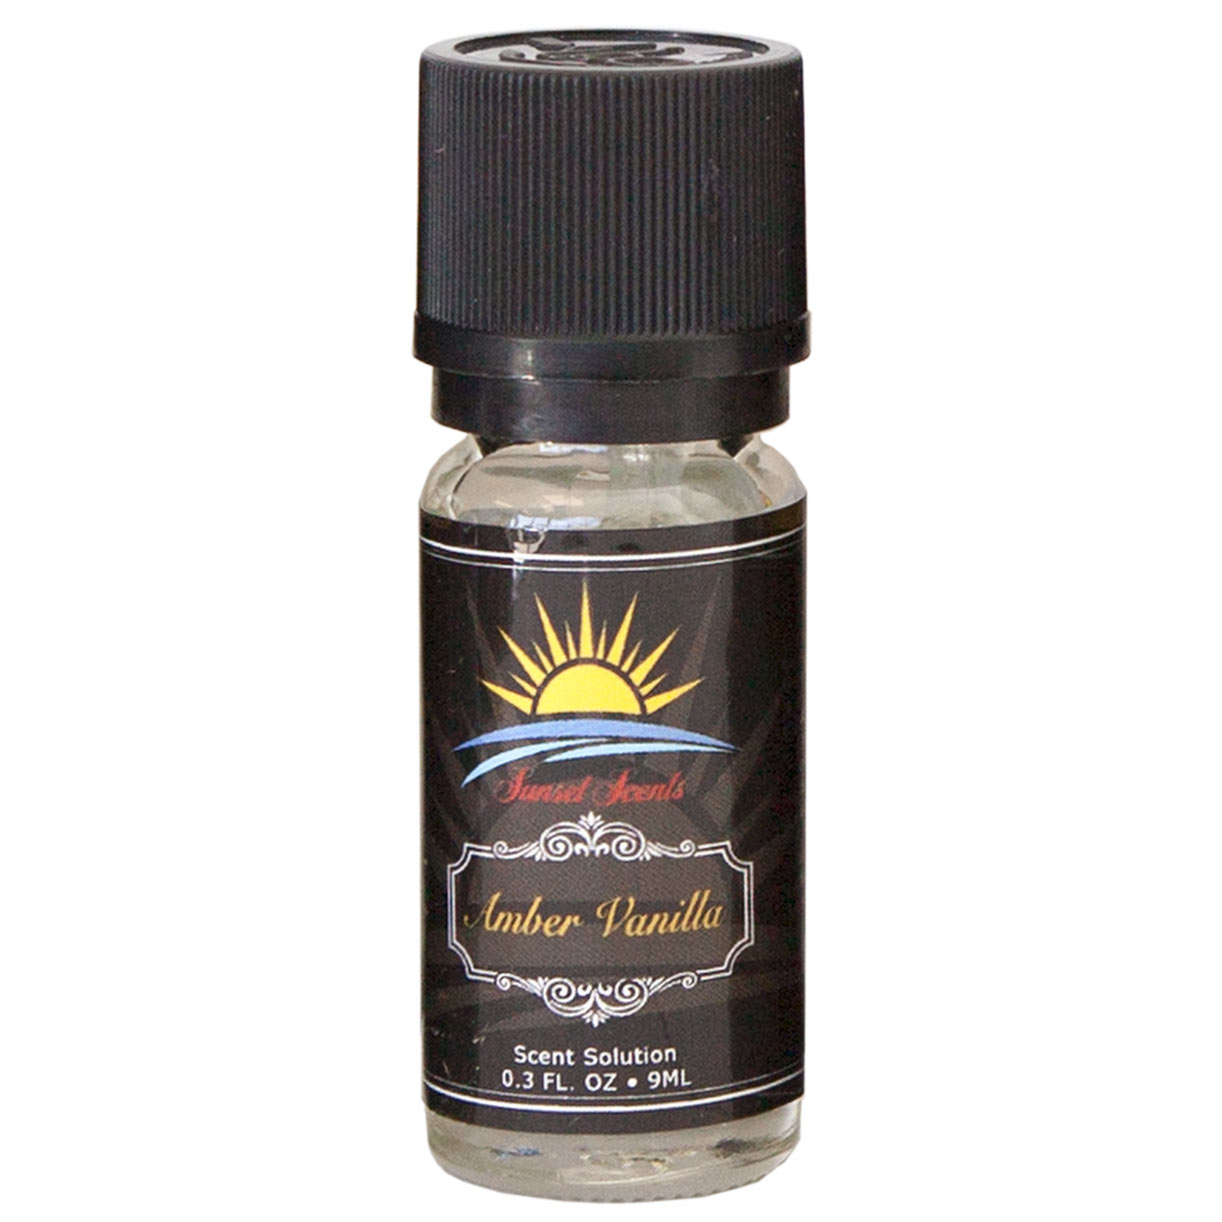 Amber Vanilla Scent Solution oil